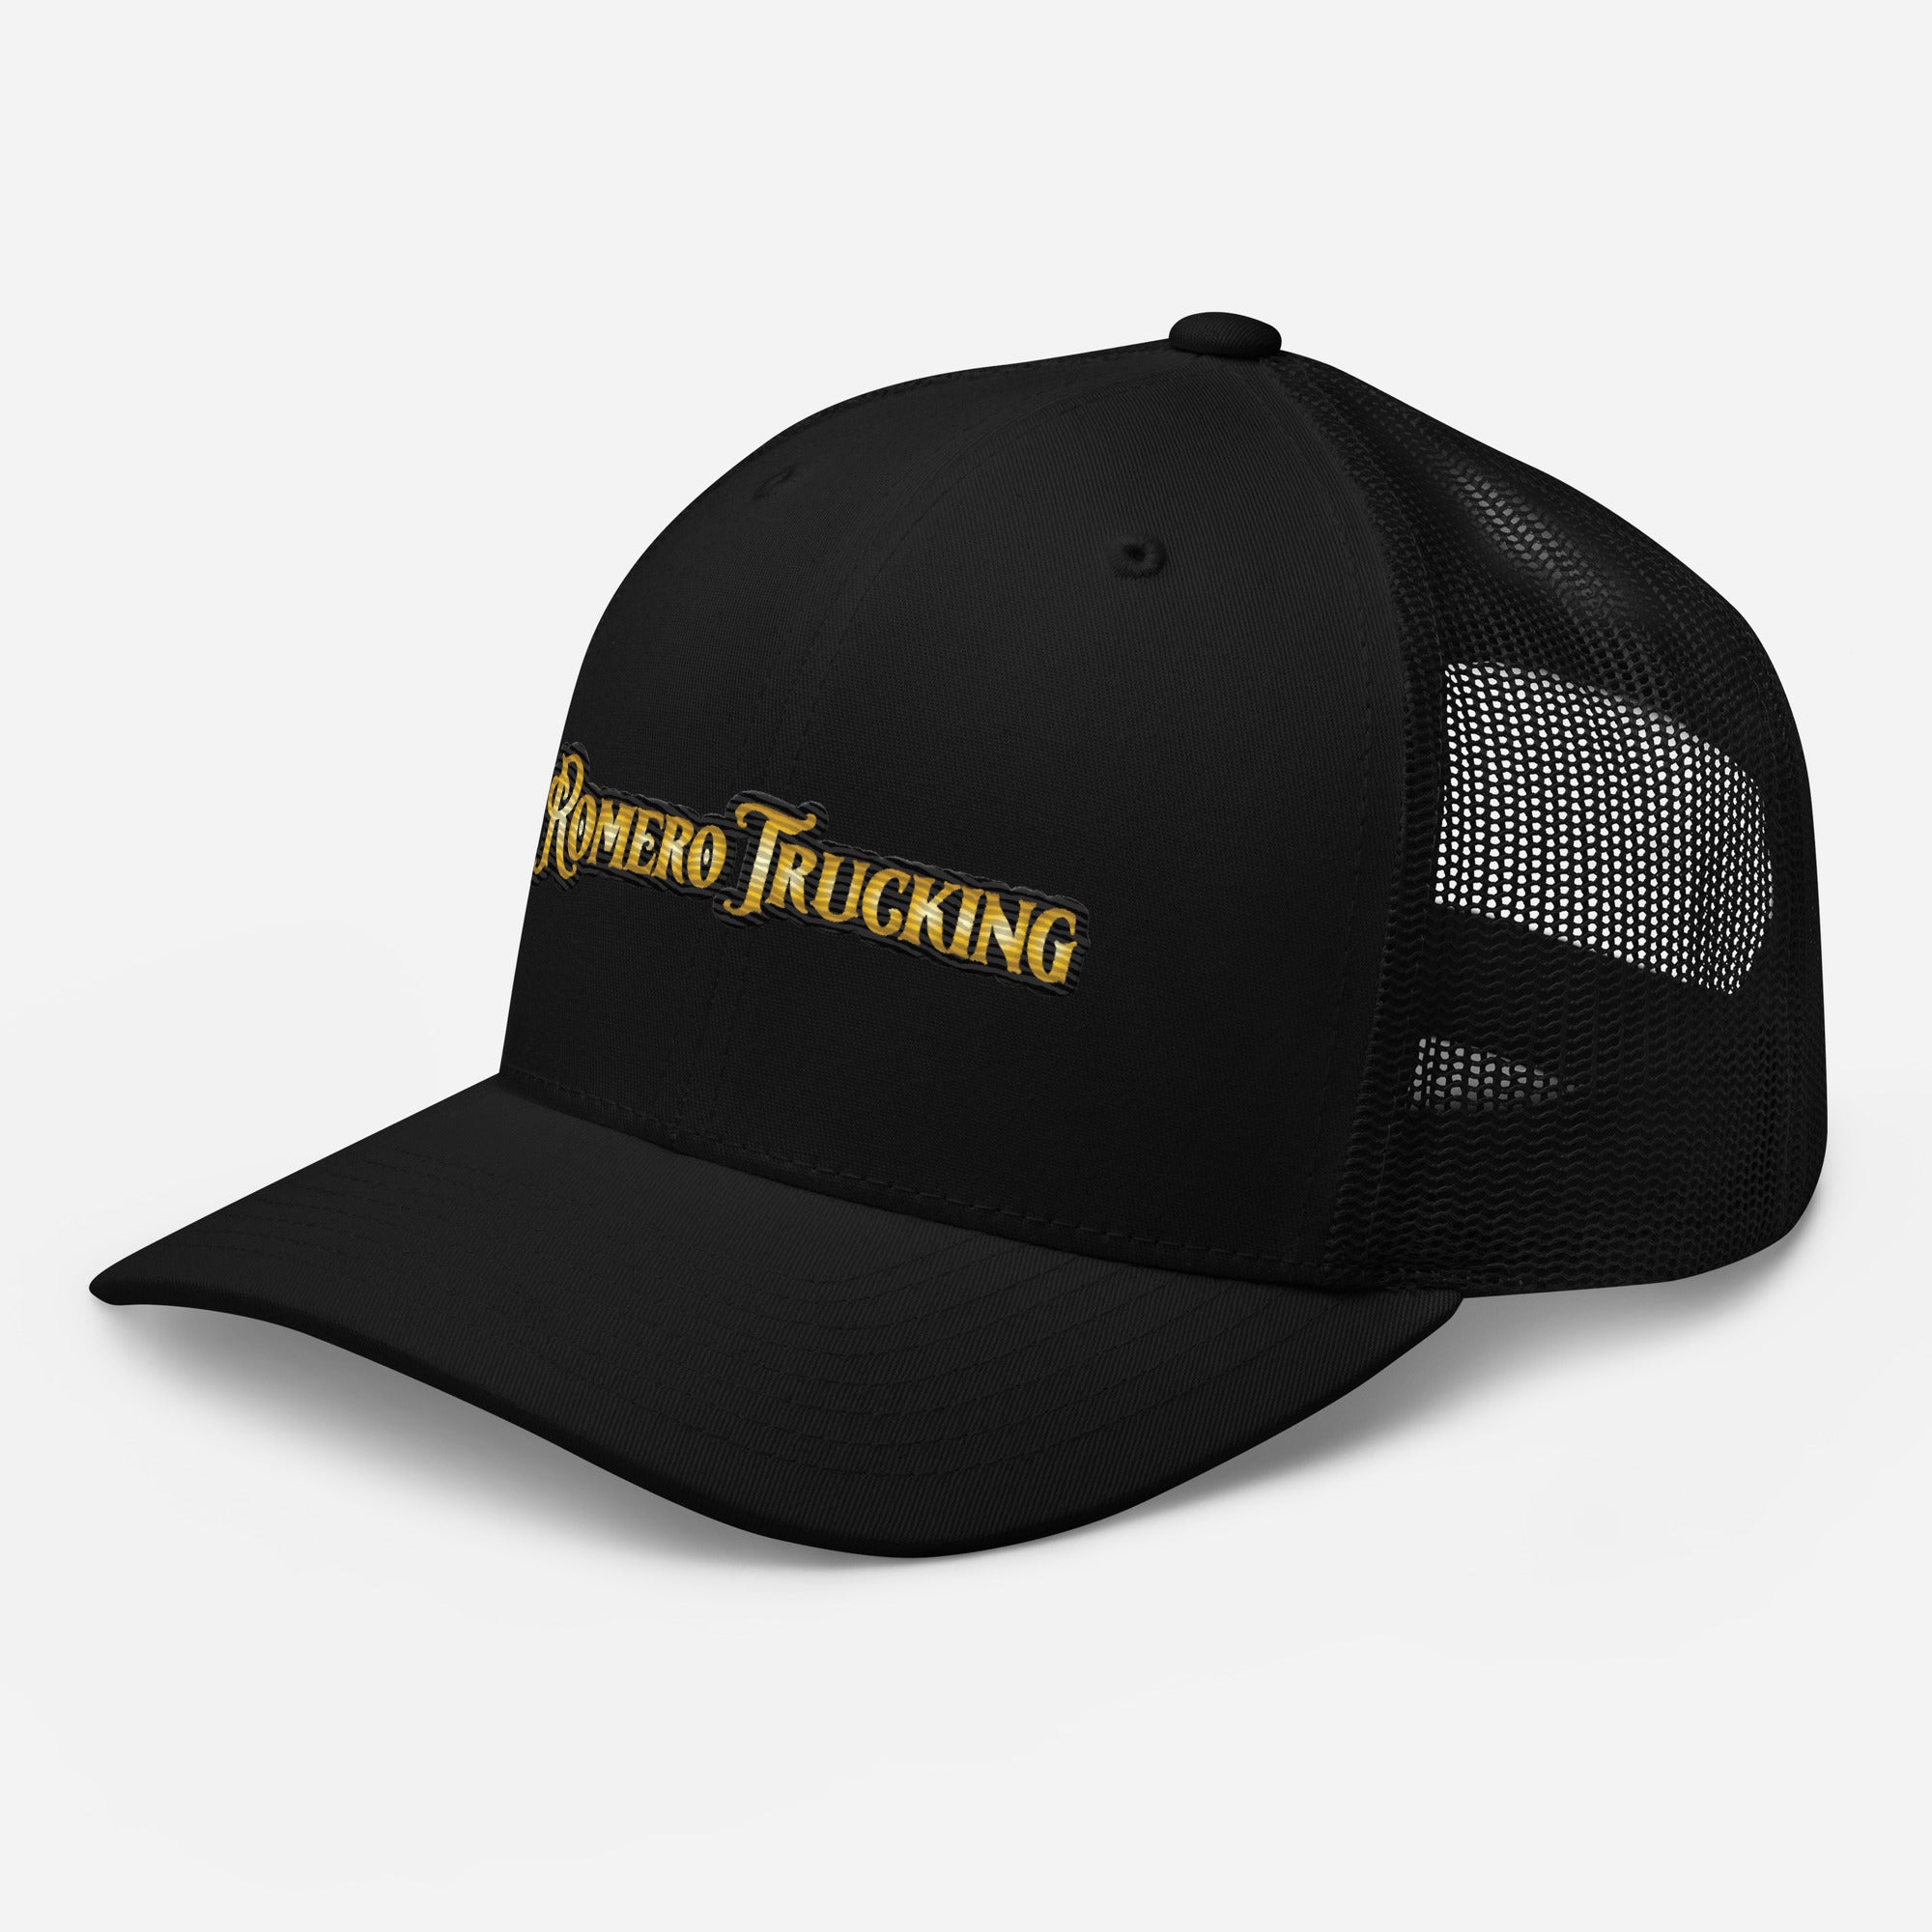 Romero Trucking | Trucker Cap | Custom